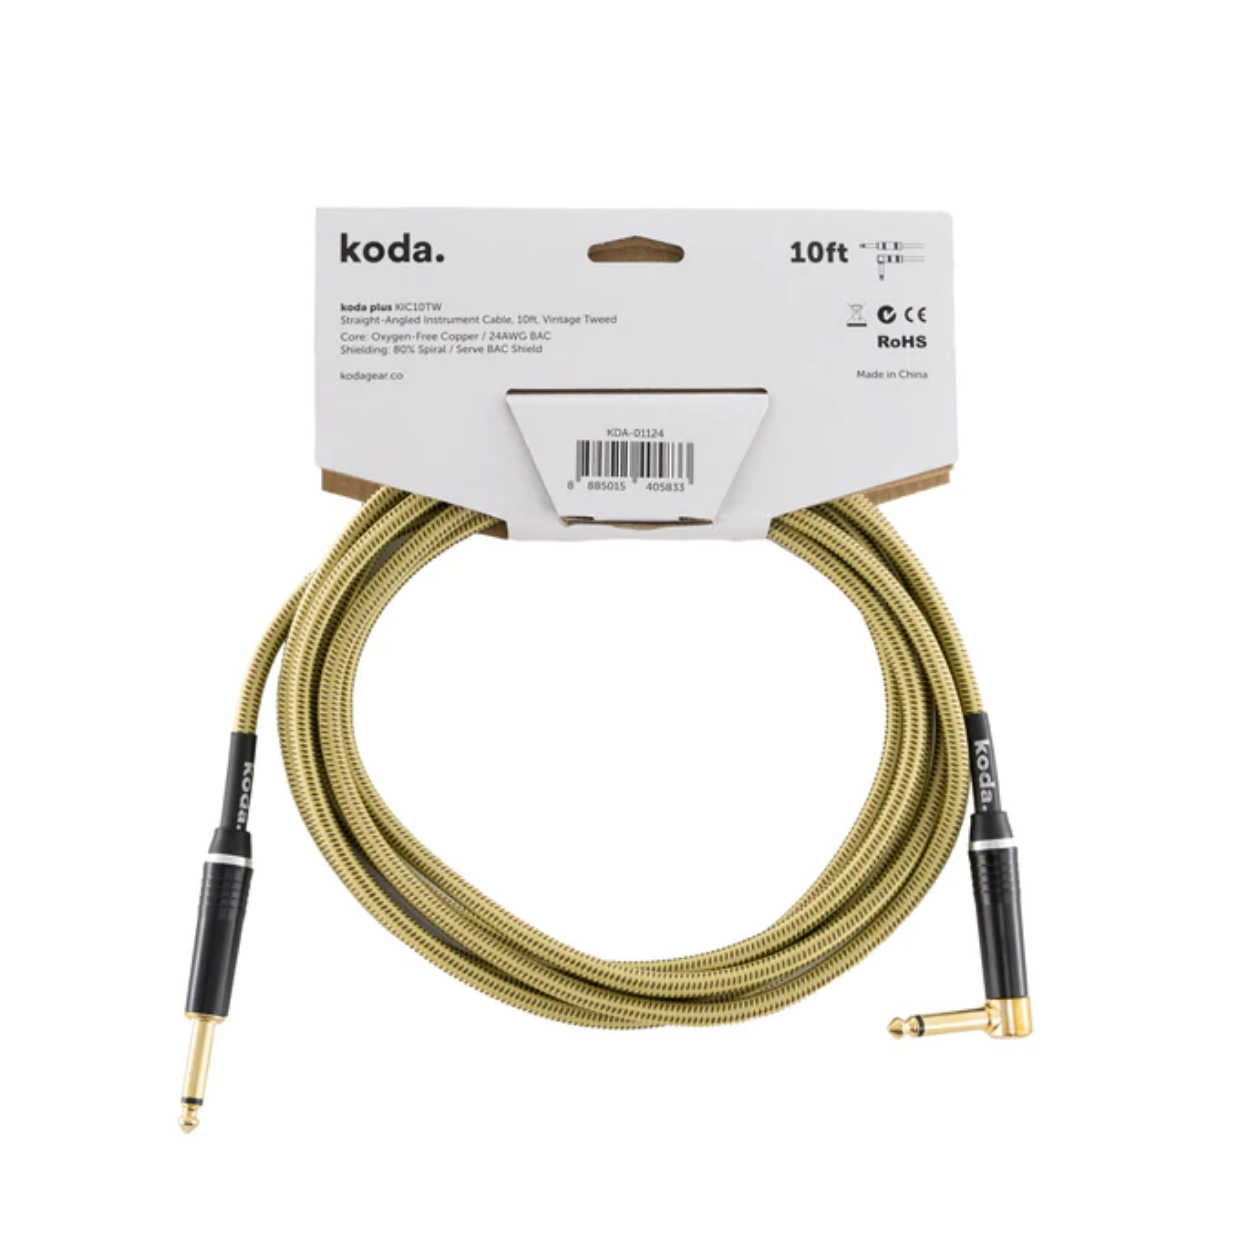 koda plus KIC10TW Straight-Angled Instrument Cable, 10ft, Vintage Tweed